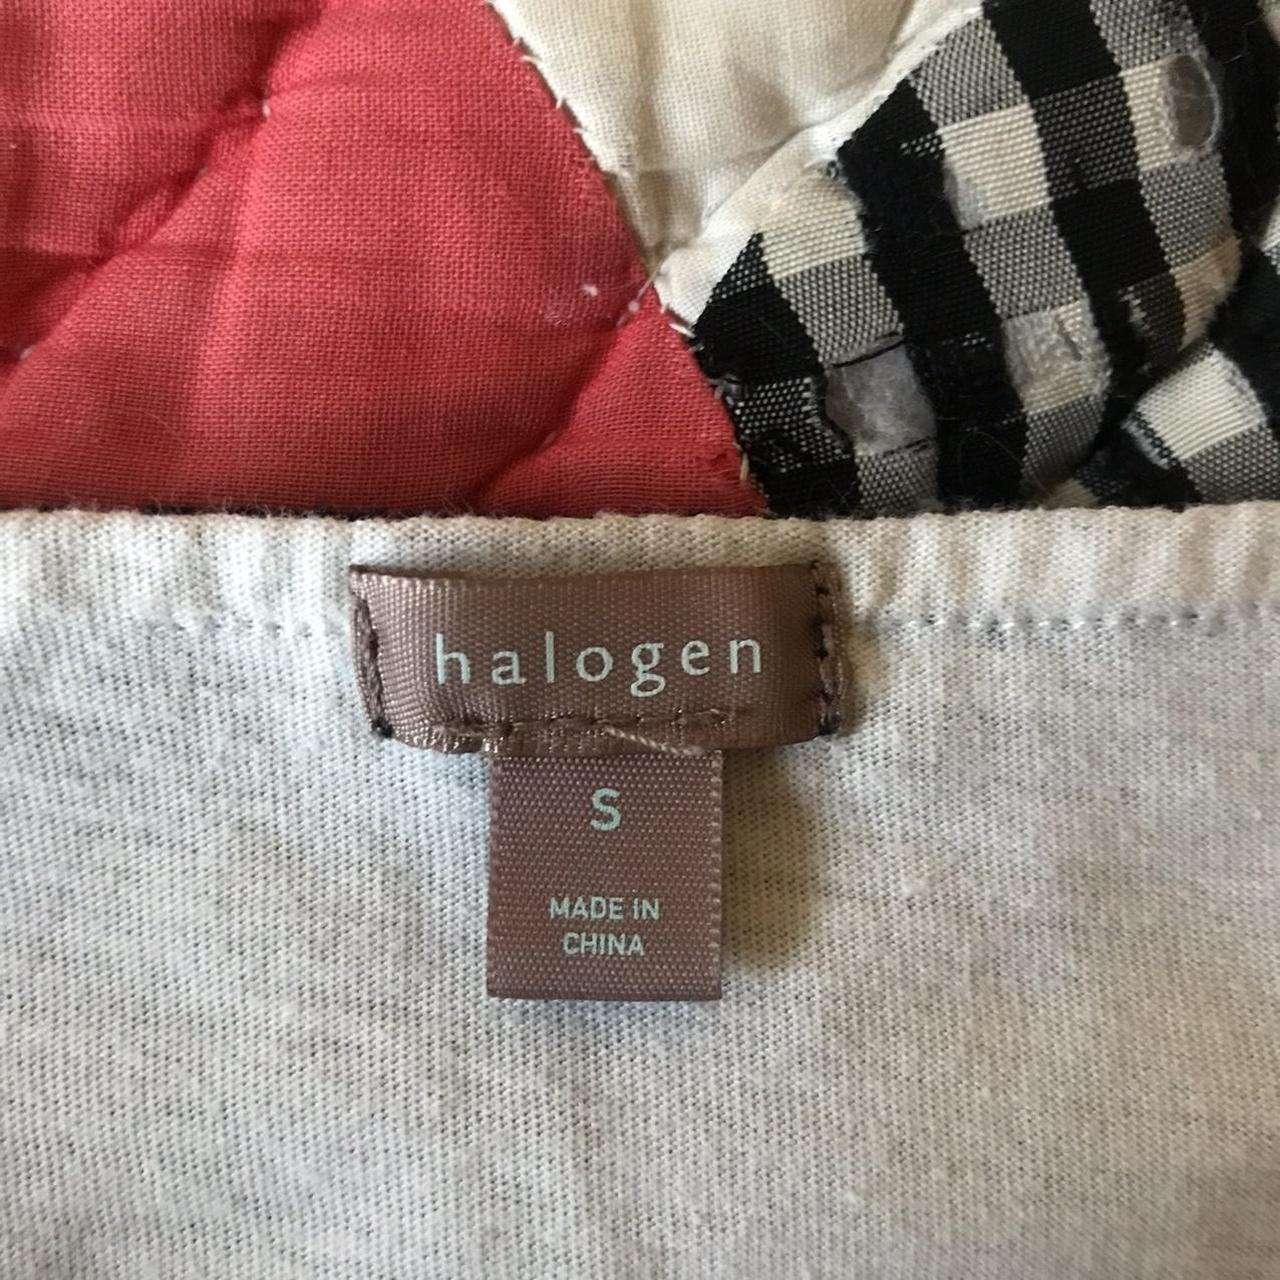 Halogen Women's Black and White Shirt (3)